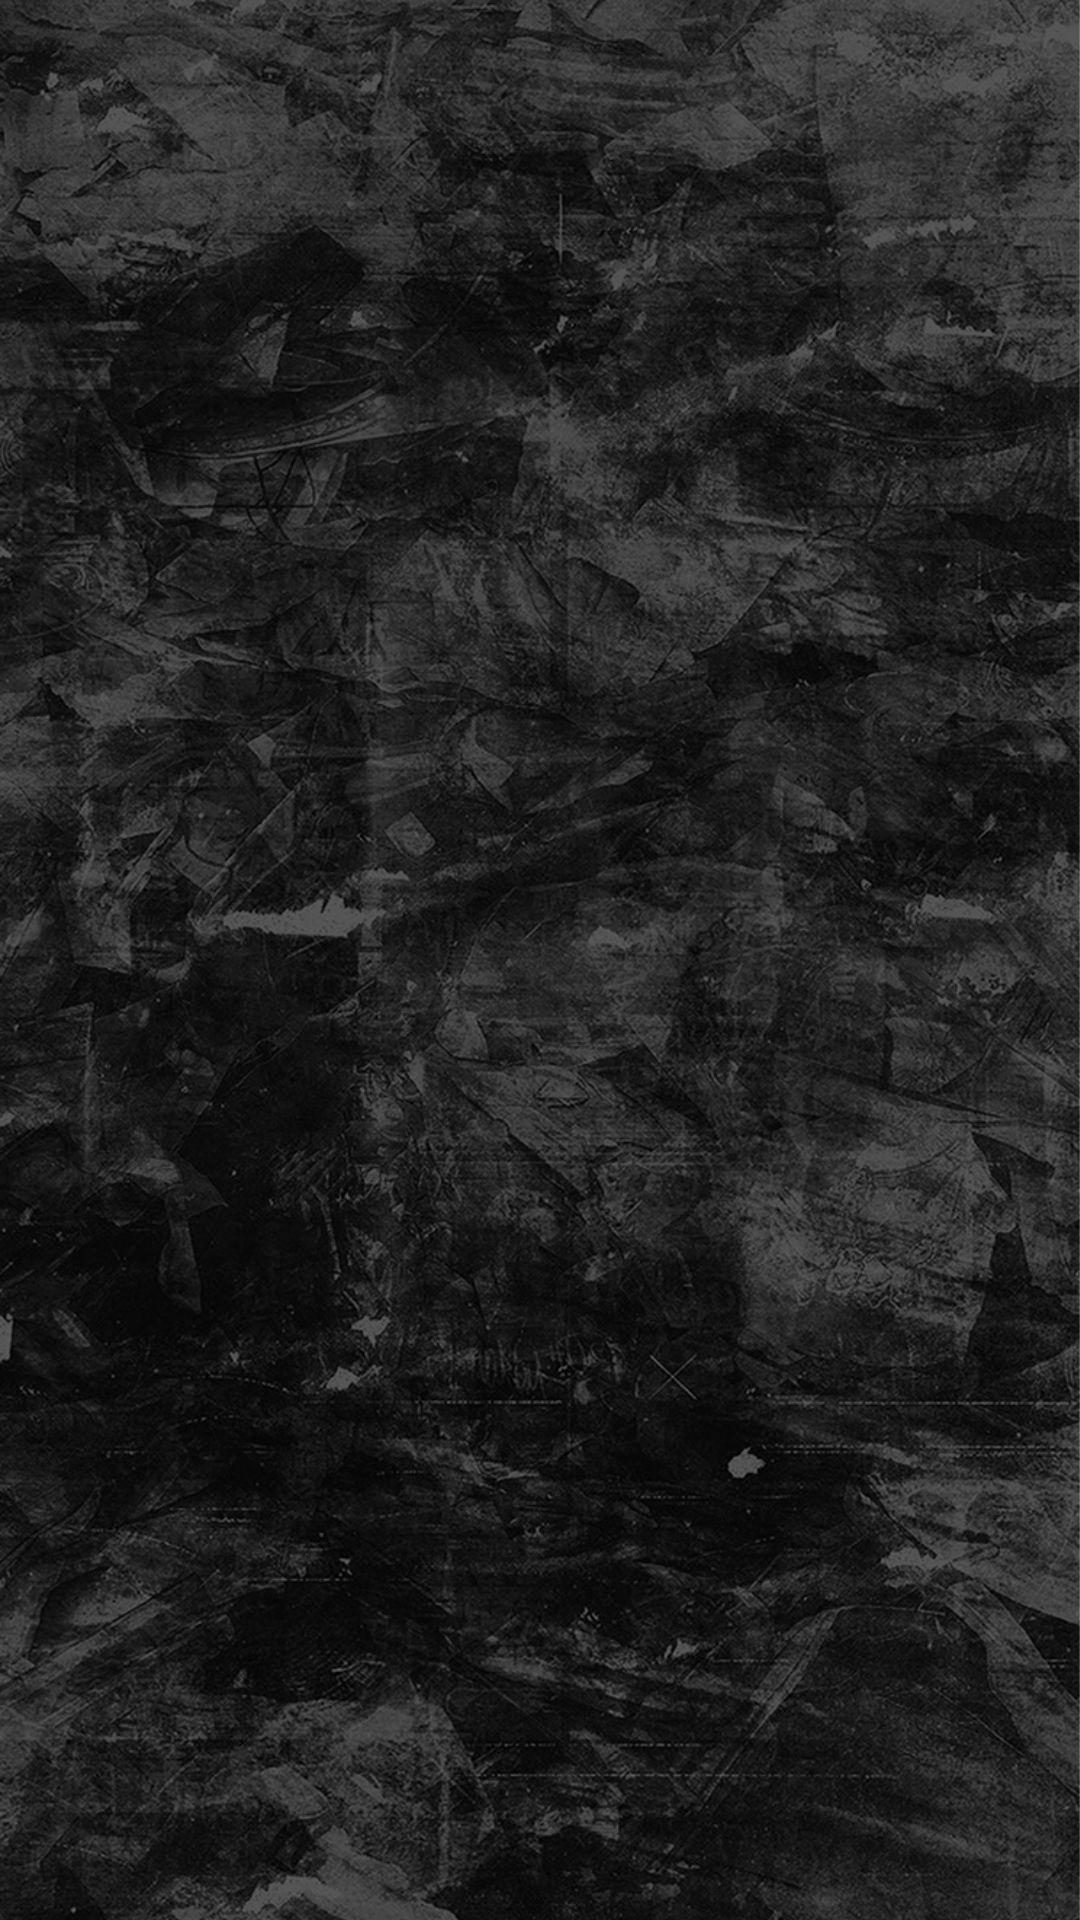 Download Gambar Black Abstract Hd Iphone Wallpaper terbaru 2020